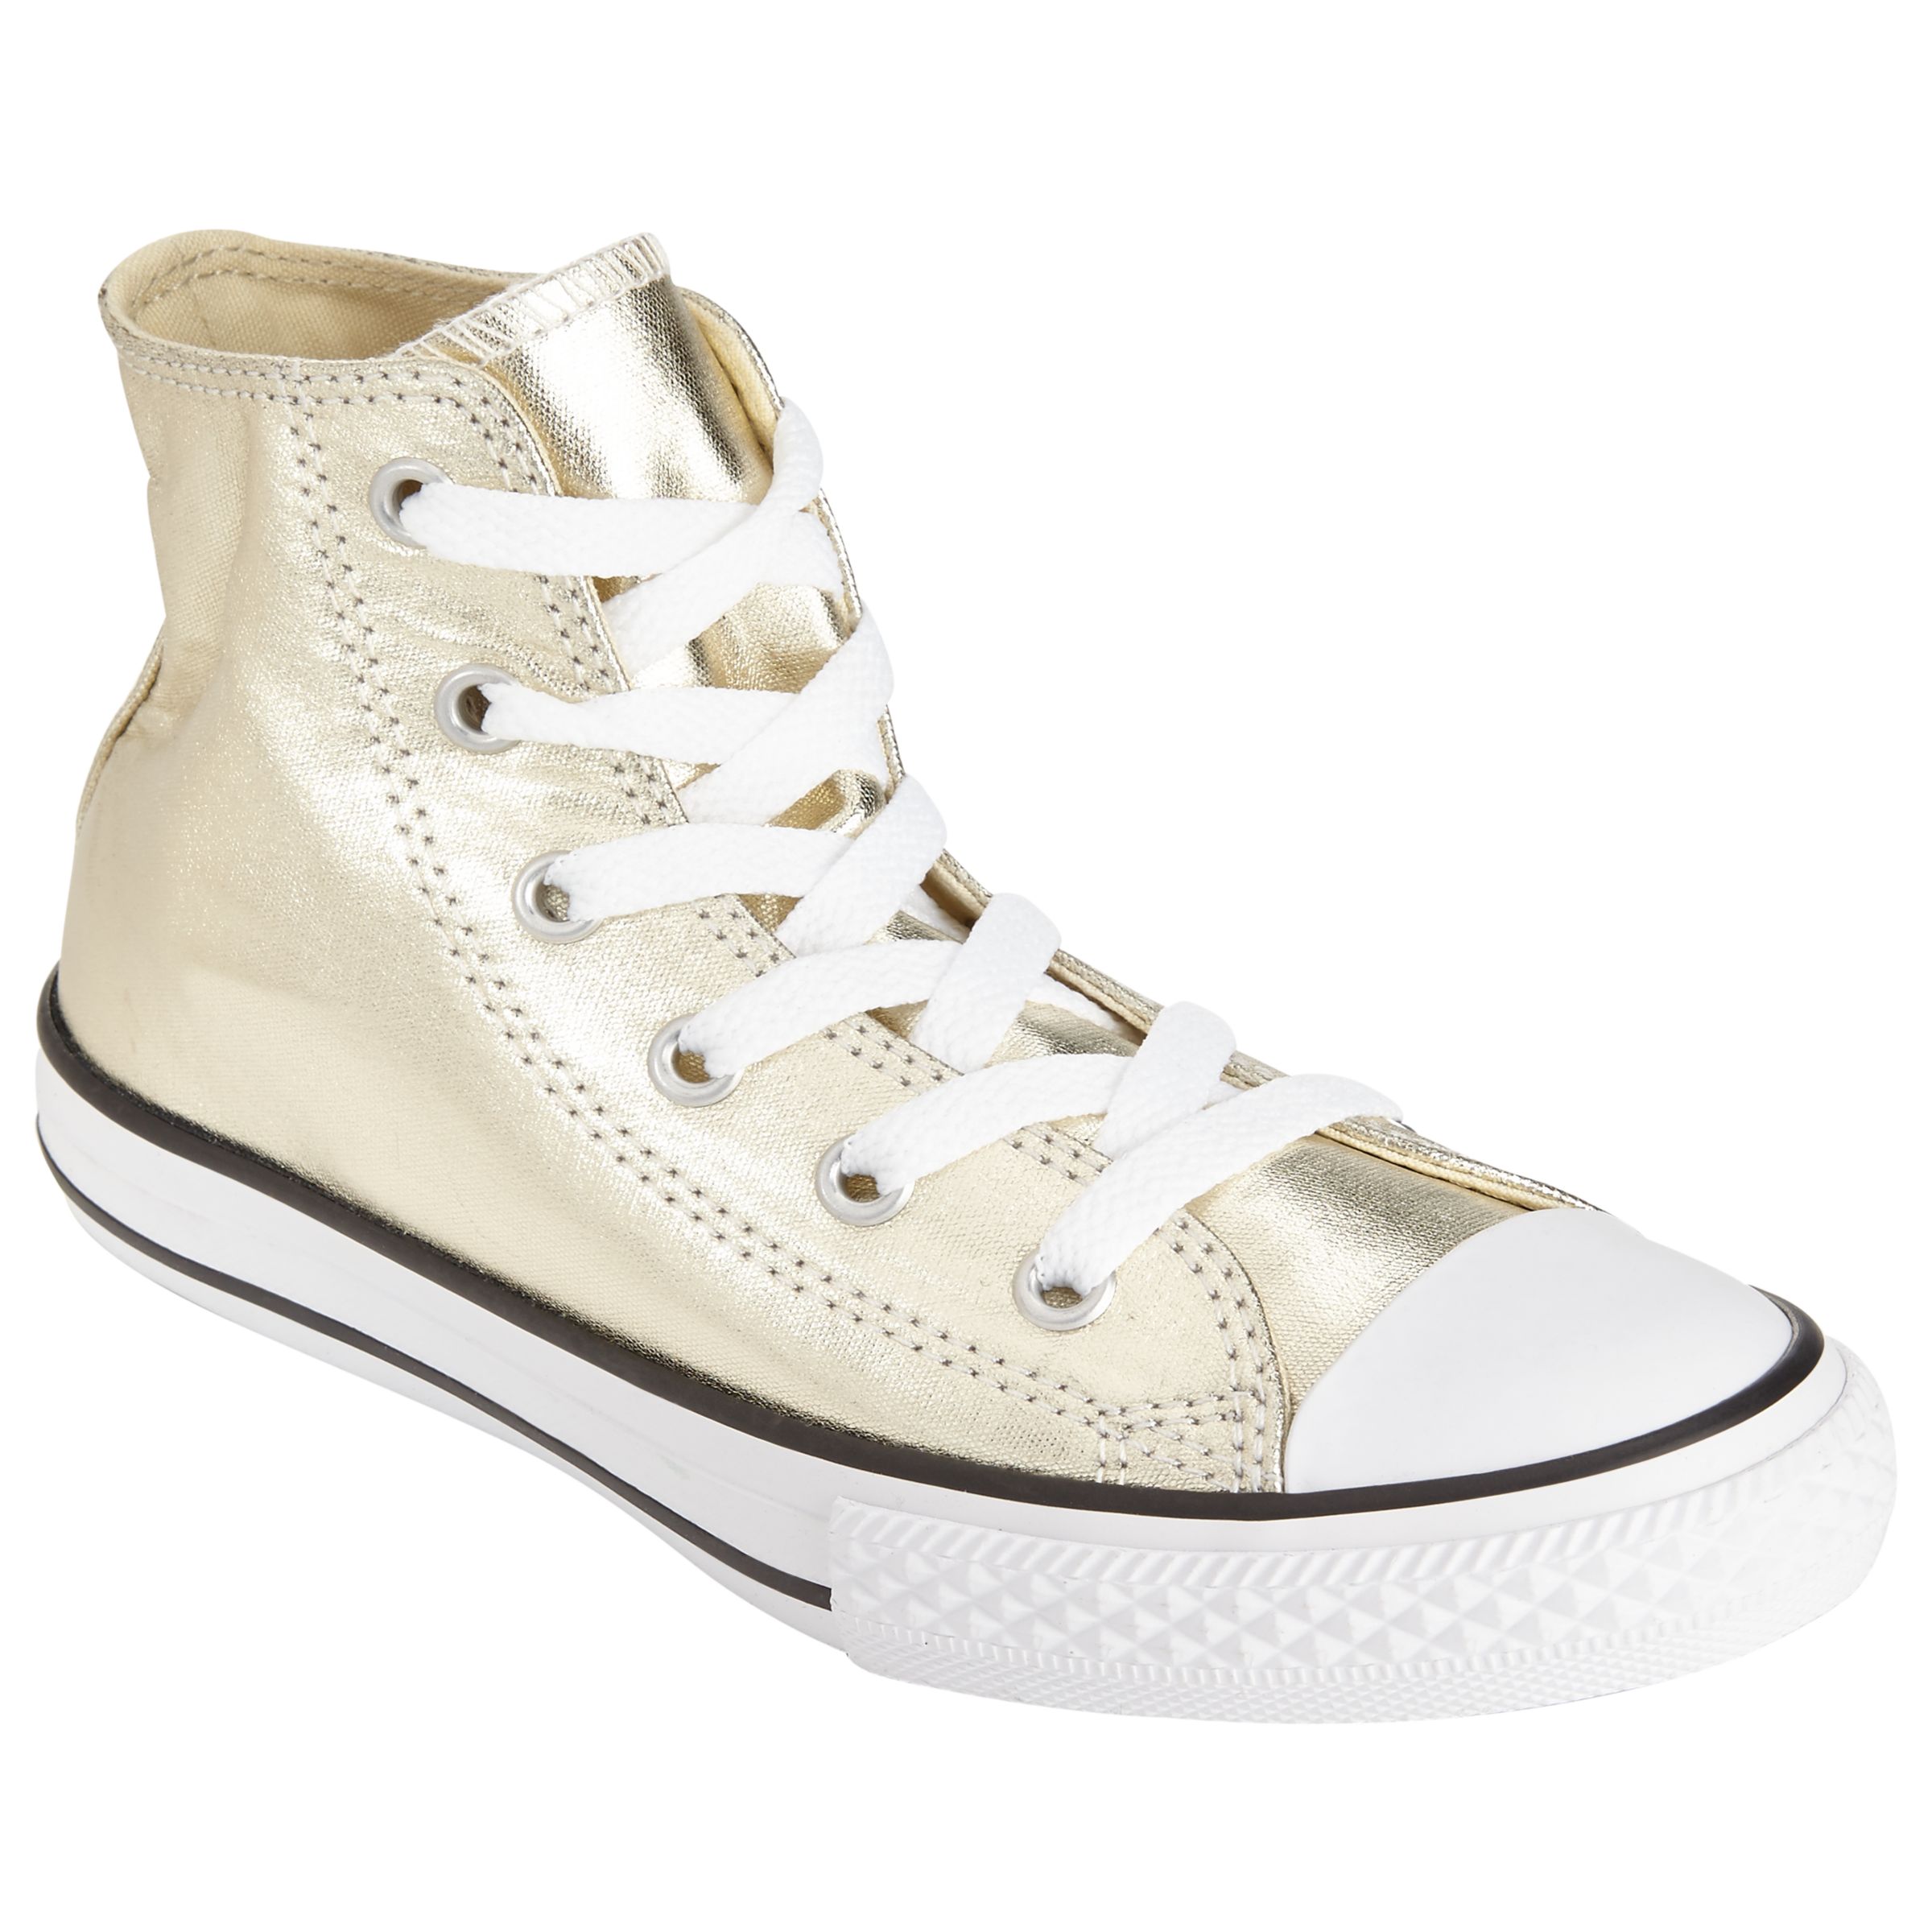 Converse Children's Hi Top Chuck Taylor Metallic Shoes, Light Gold, 5